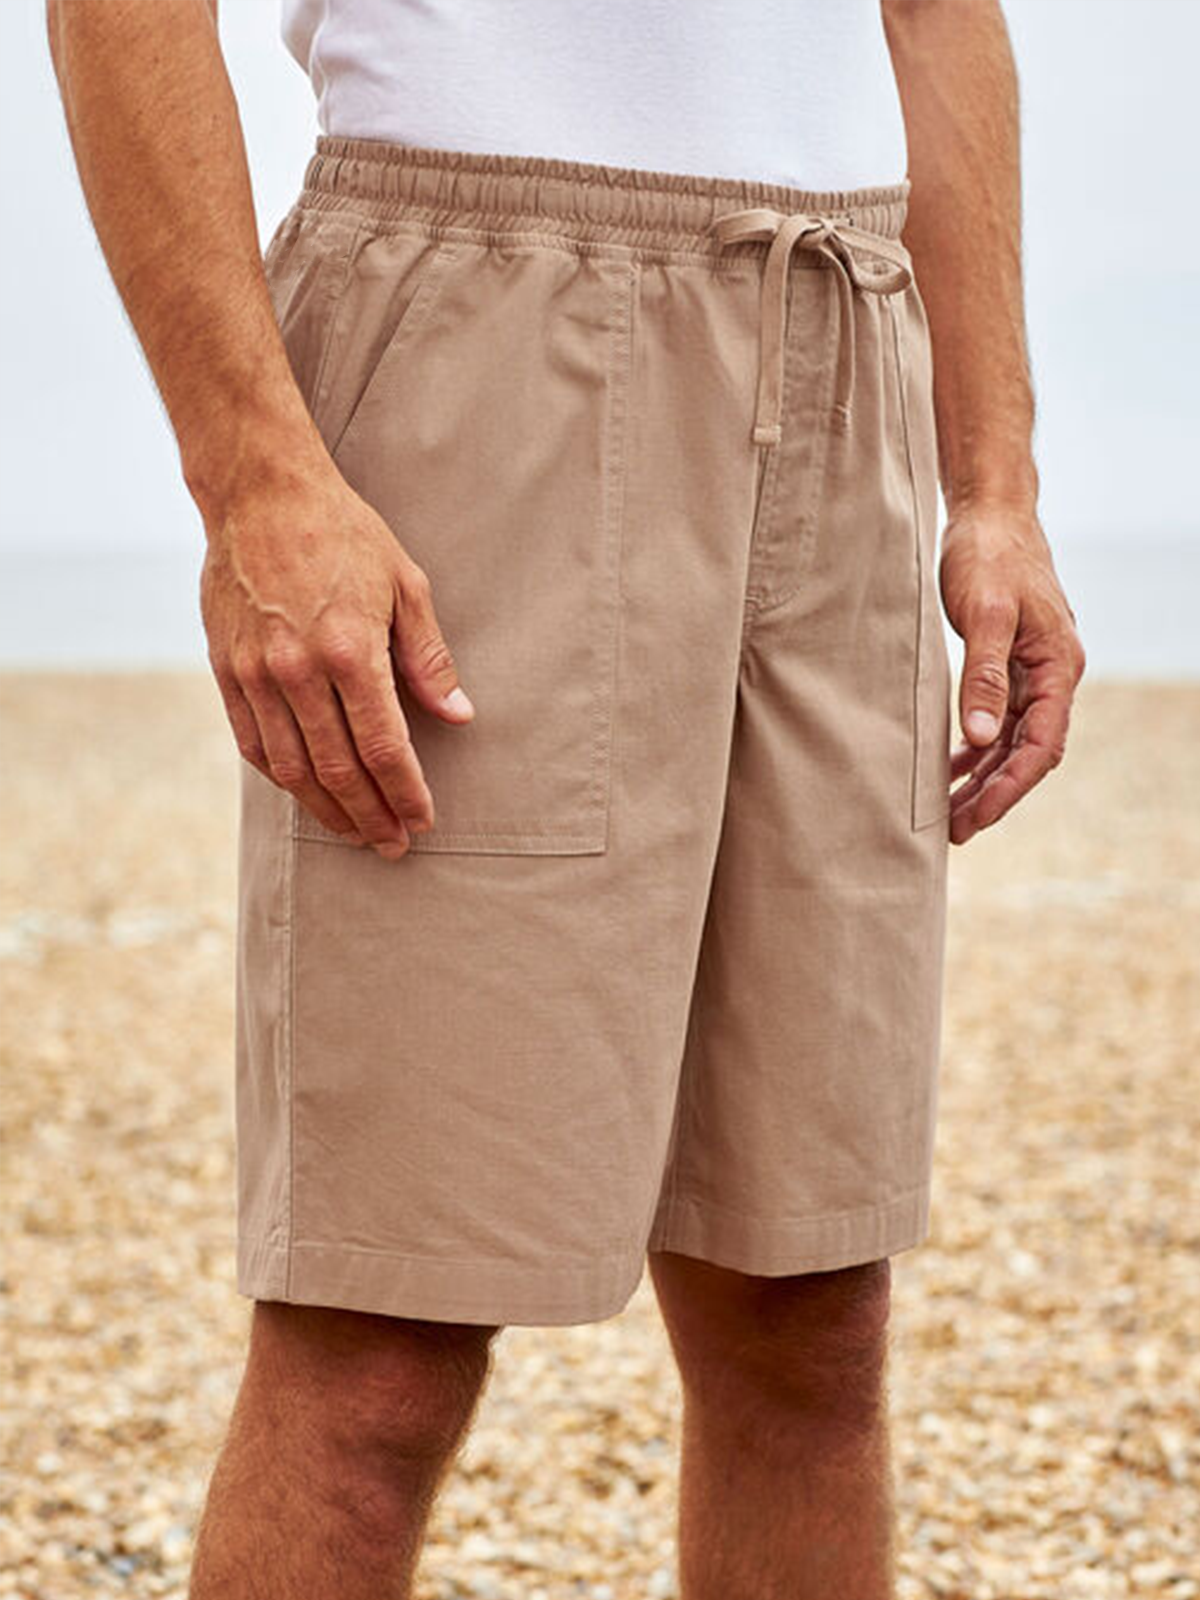 Cotton Linen Solid Basic Shorts